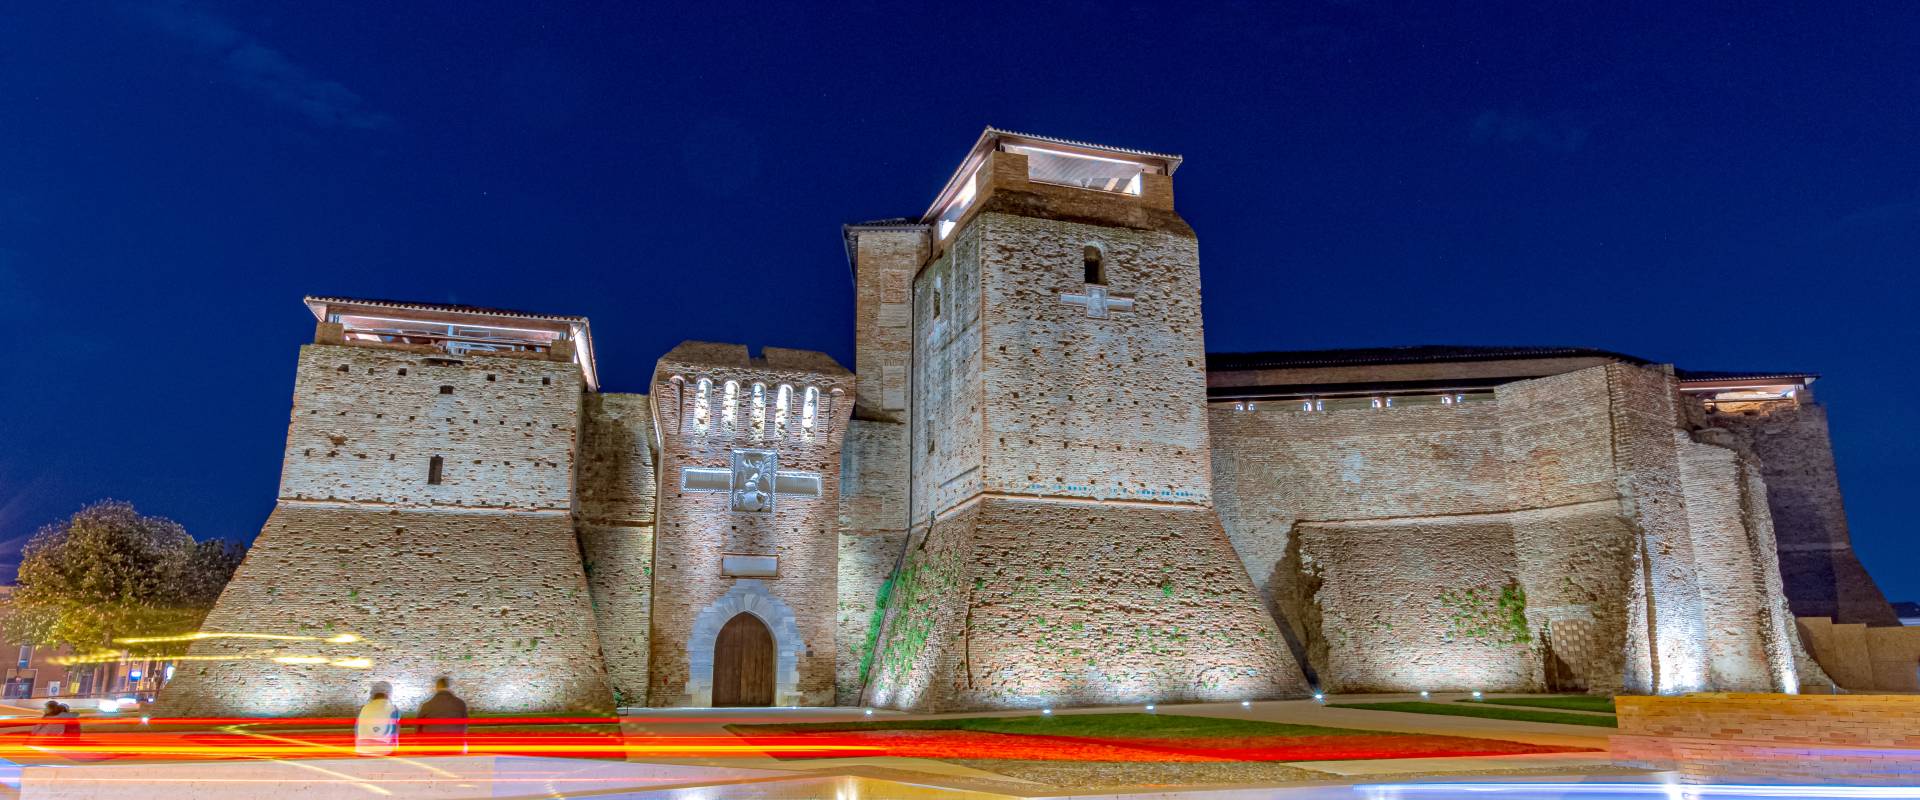 Castel Sismondo di sera photo by Perpaulo40